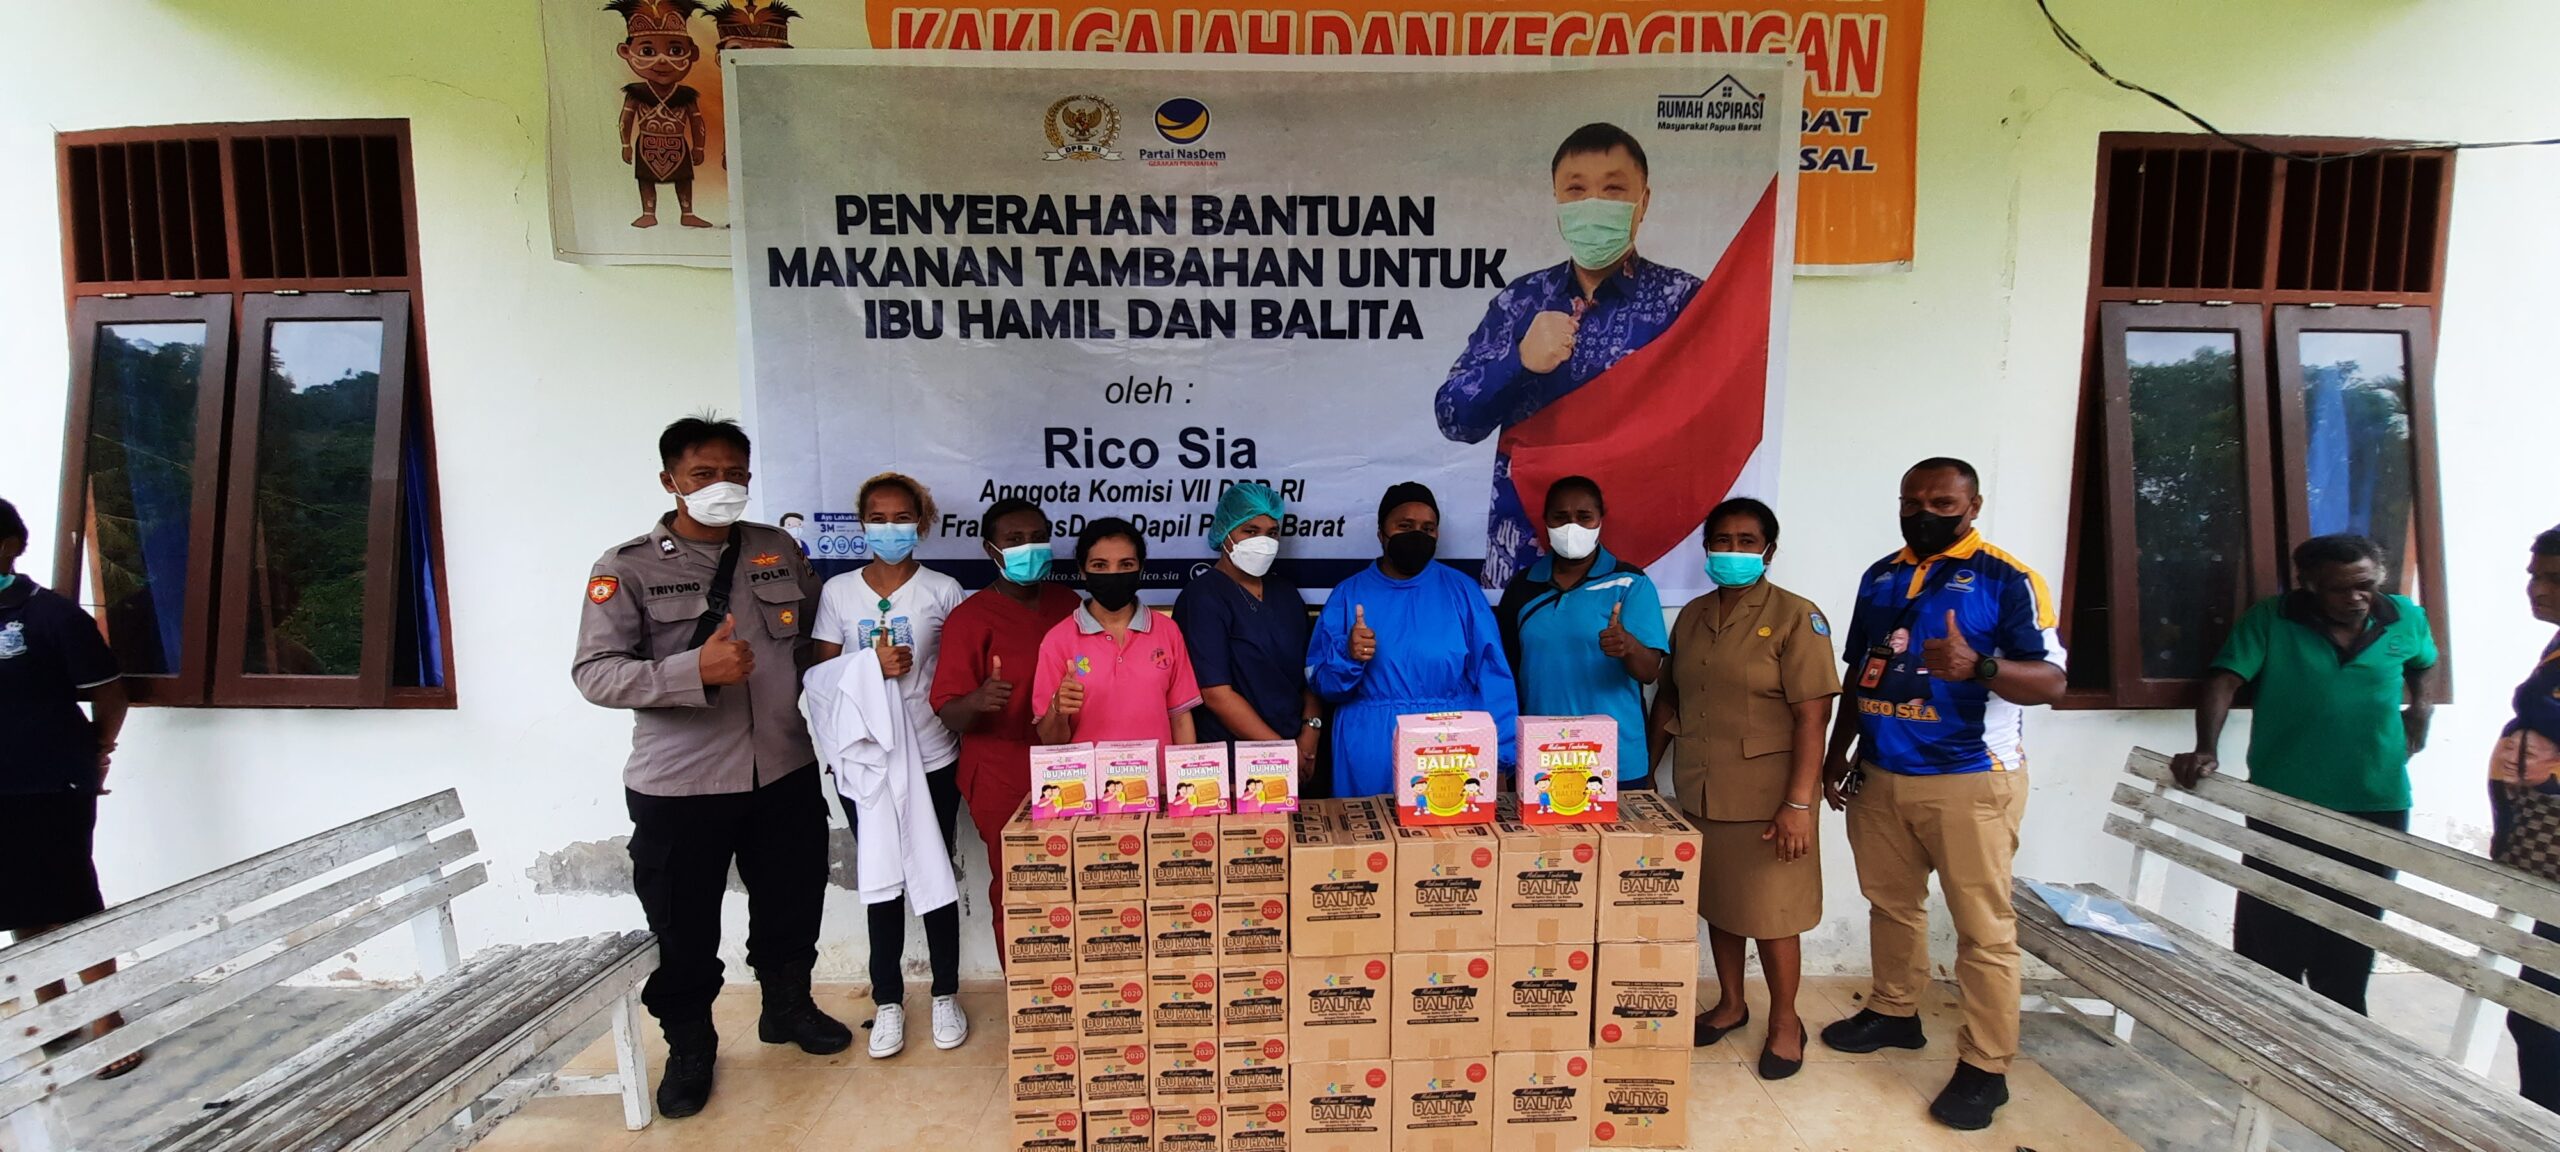 Bantu Penuhi Gizi Dimasa Pandemi, Rico Sia Bagi 400 Paket BMT Untuk Balita Dan Ibu Hamil di Makbon 1 20211101 113816 2 scaled